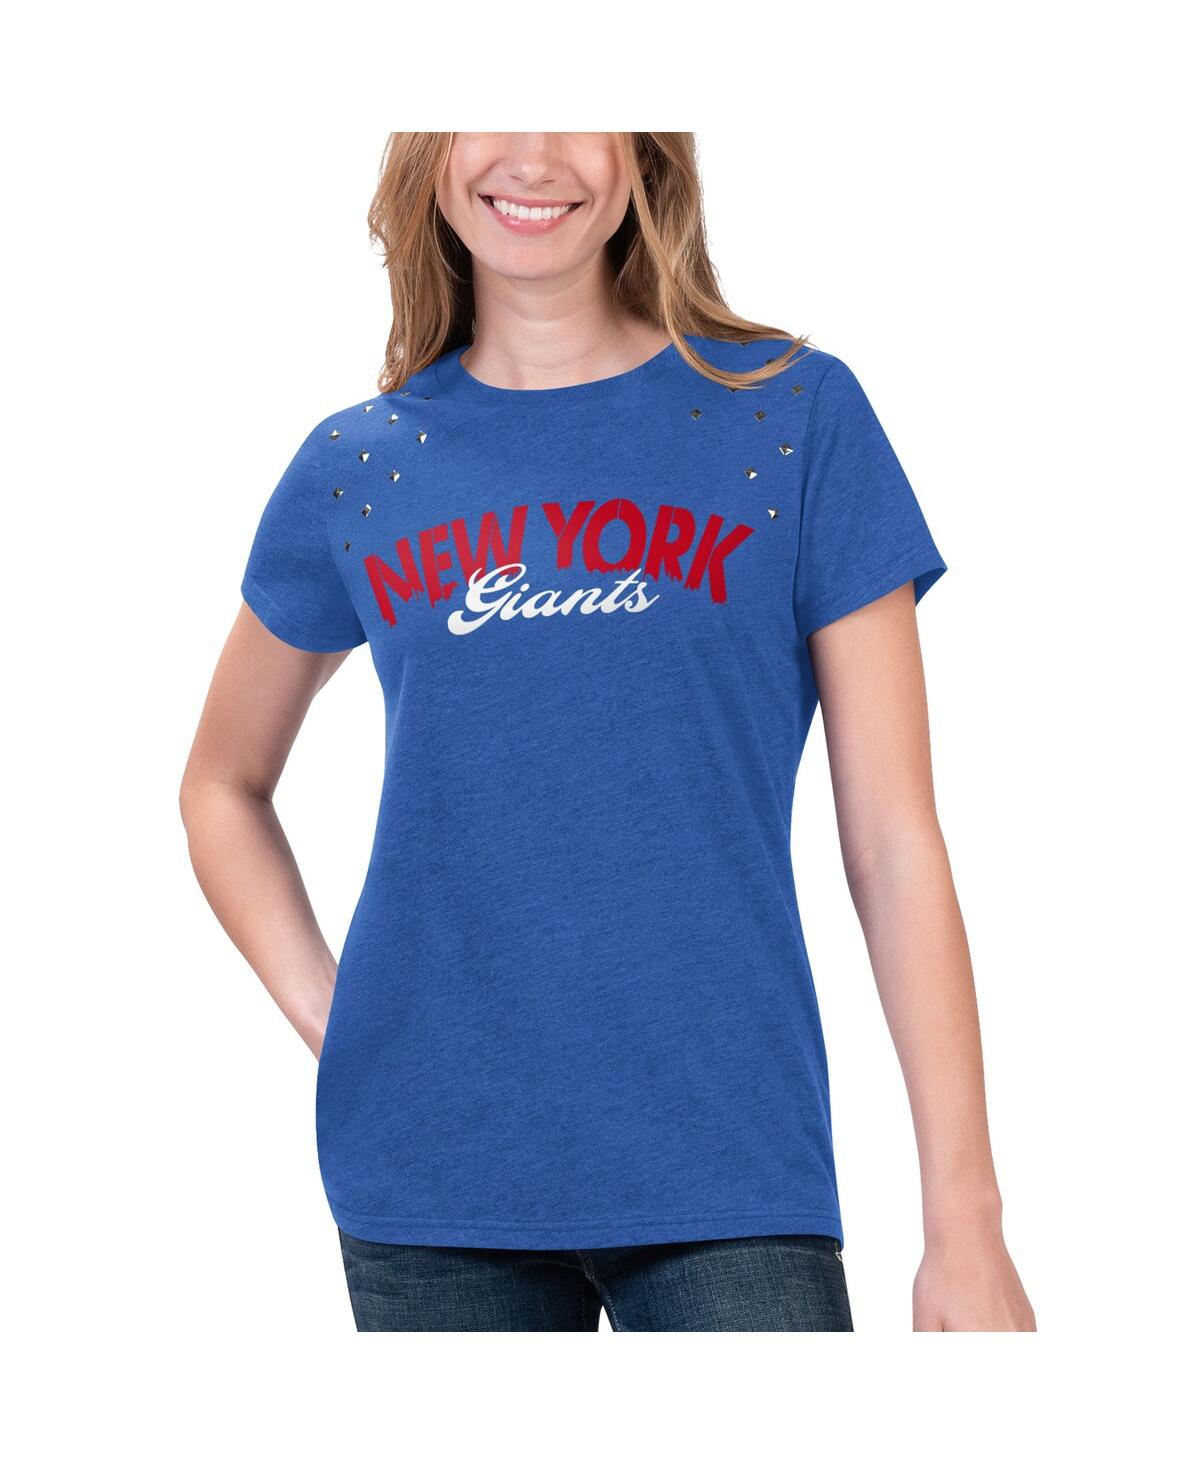 Women's G-iii 4Her by Carl Banks Heathered Royal New York Giants Main Game T-shirt - Royal